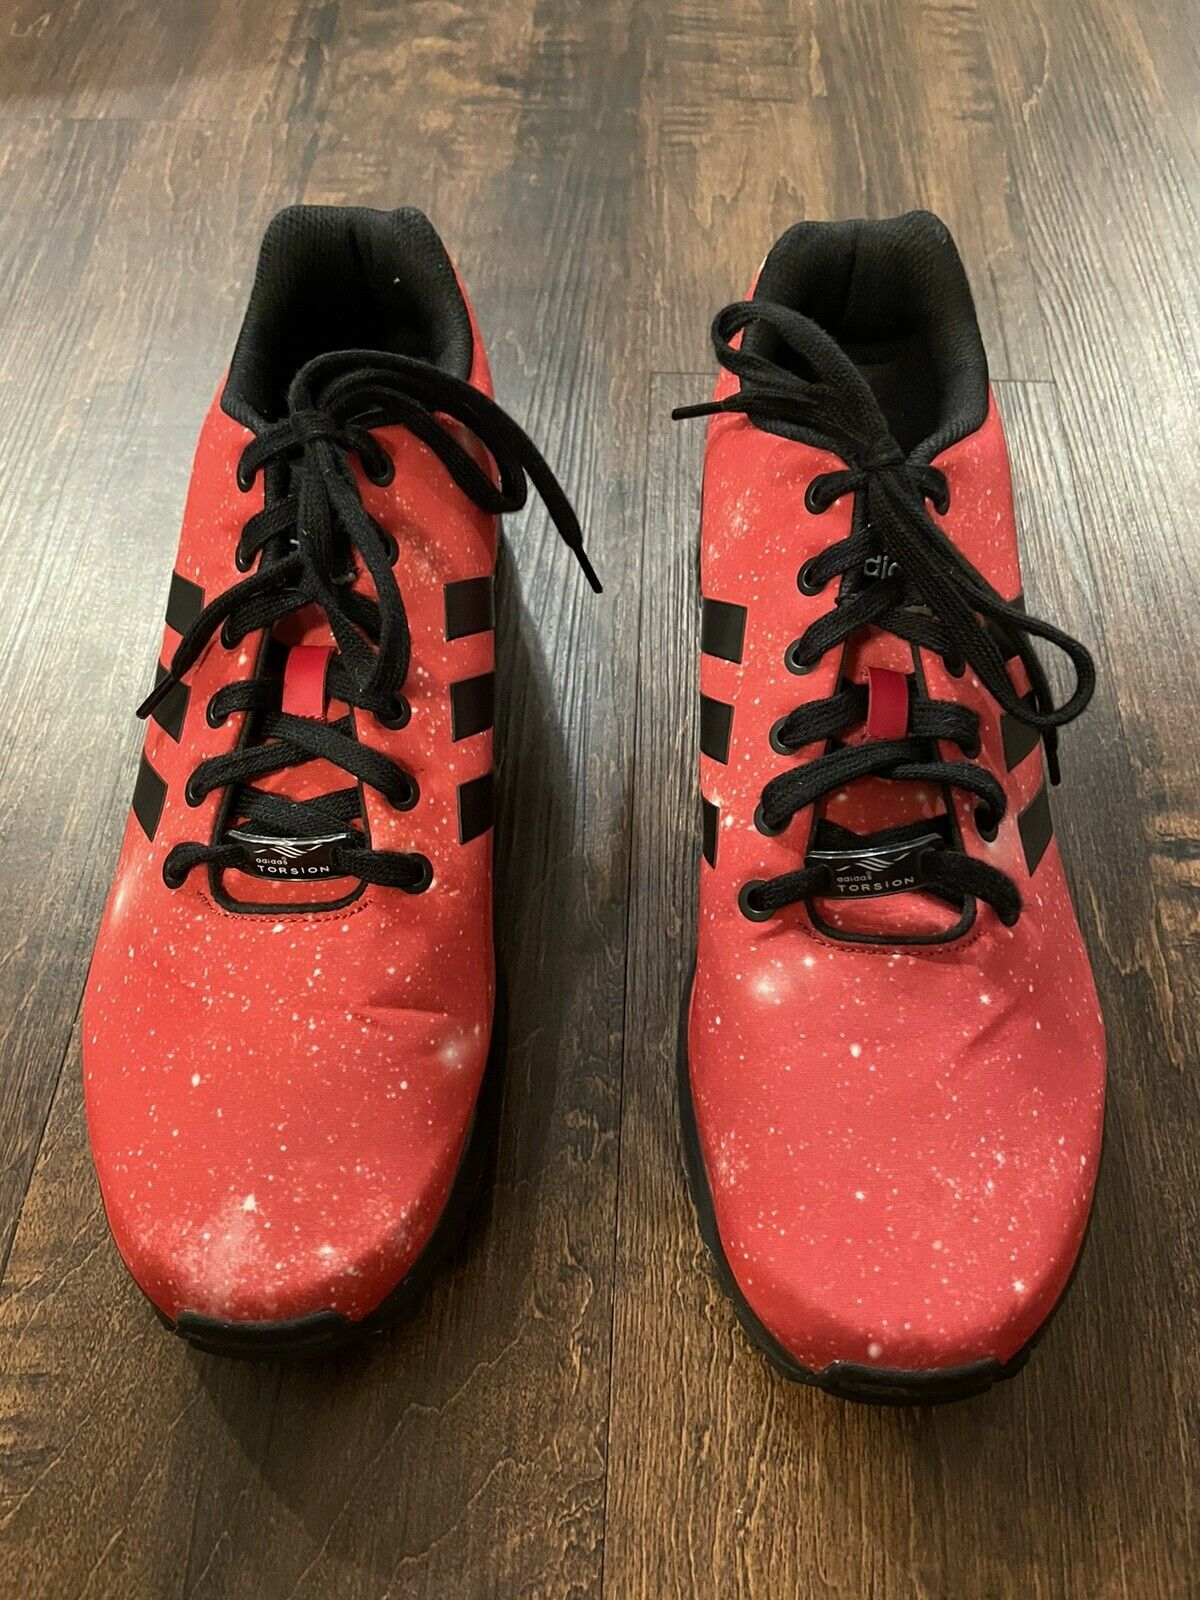 Adidas ZX Flux Red/Black Men's Shoes SIZE 11